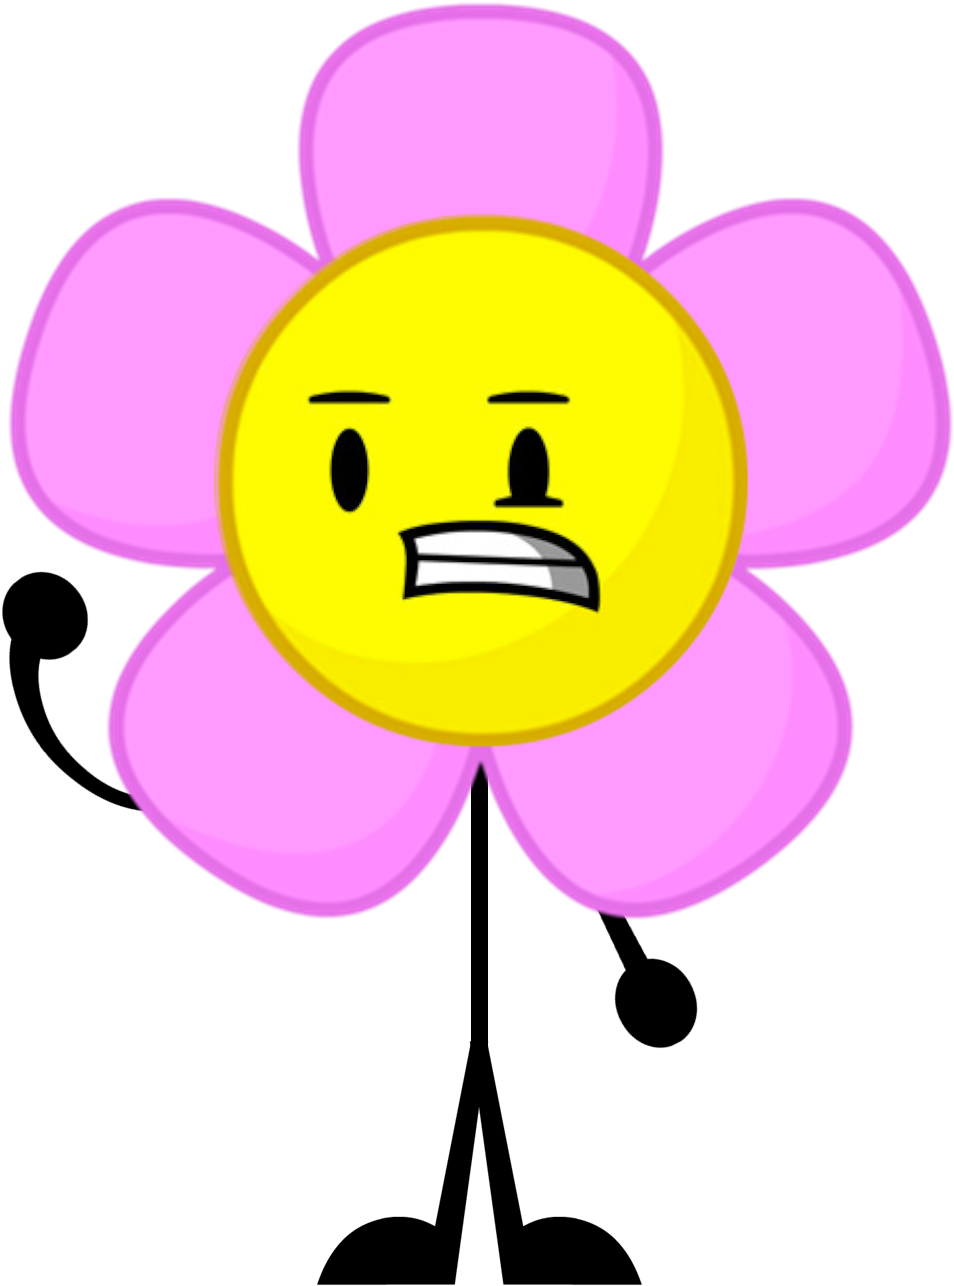 Flower Bfdi - Battle For Dream Island Flower (1025x1300)